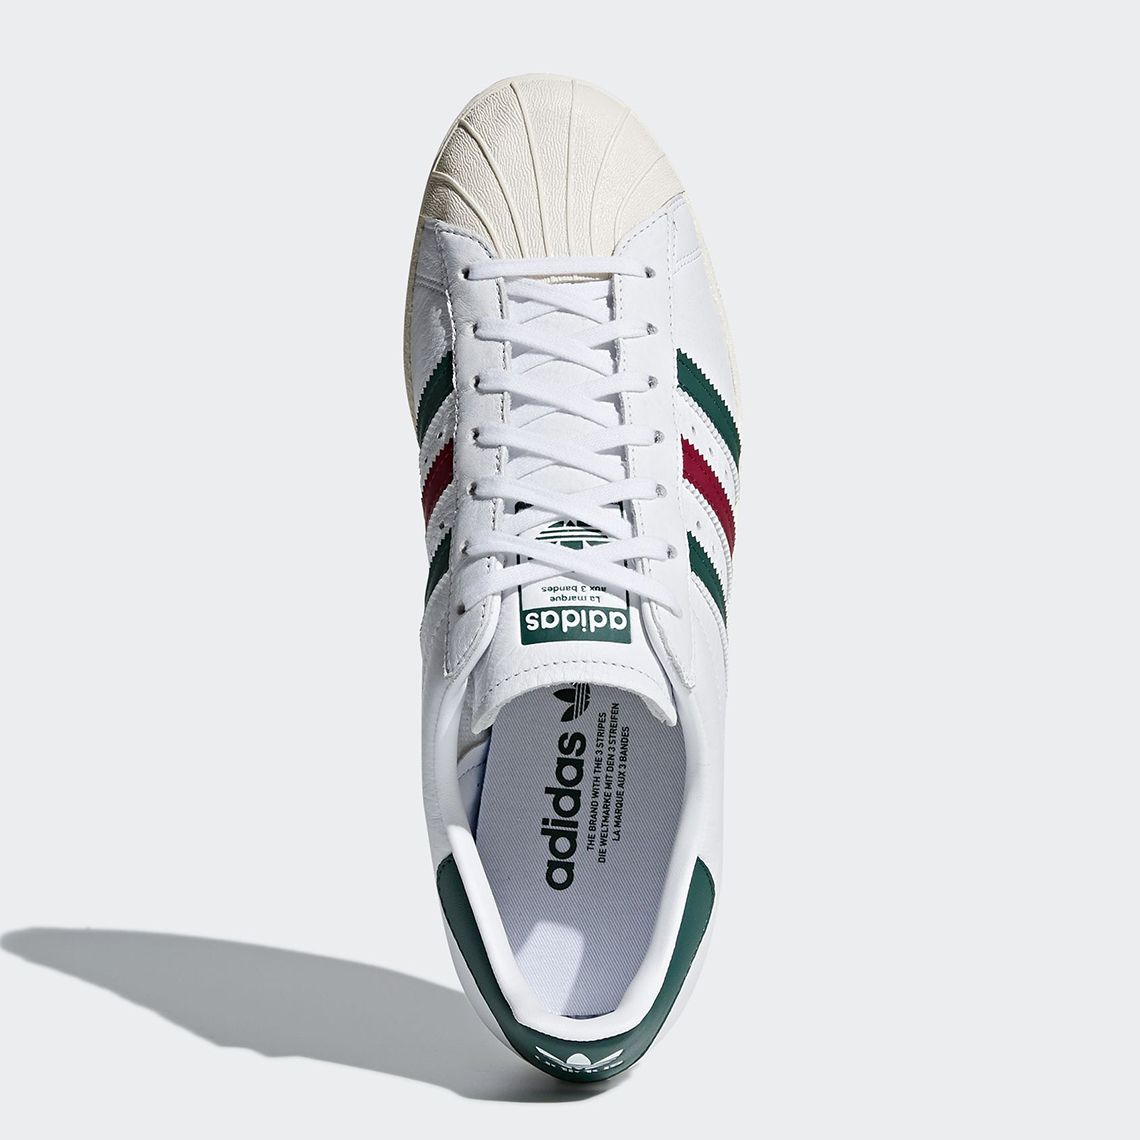 This adidas Superstar Features Italian Stripes — Adidas